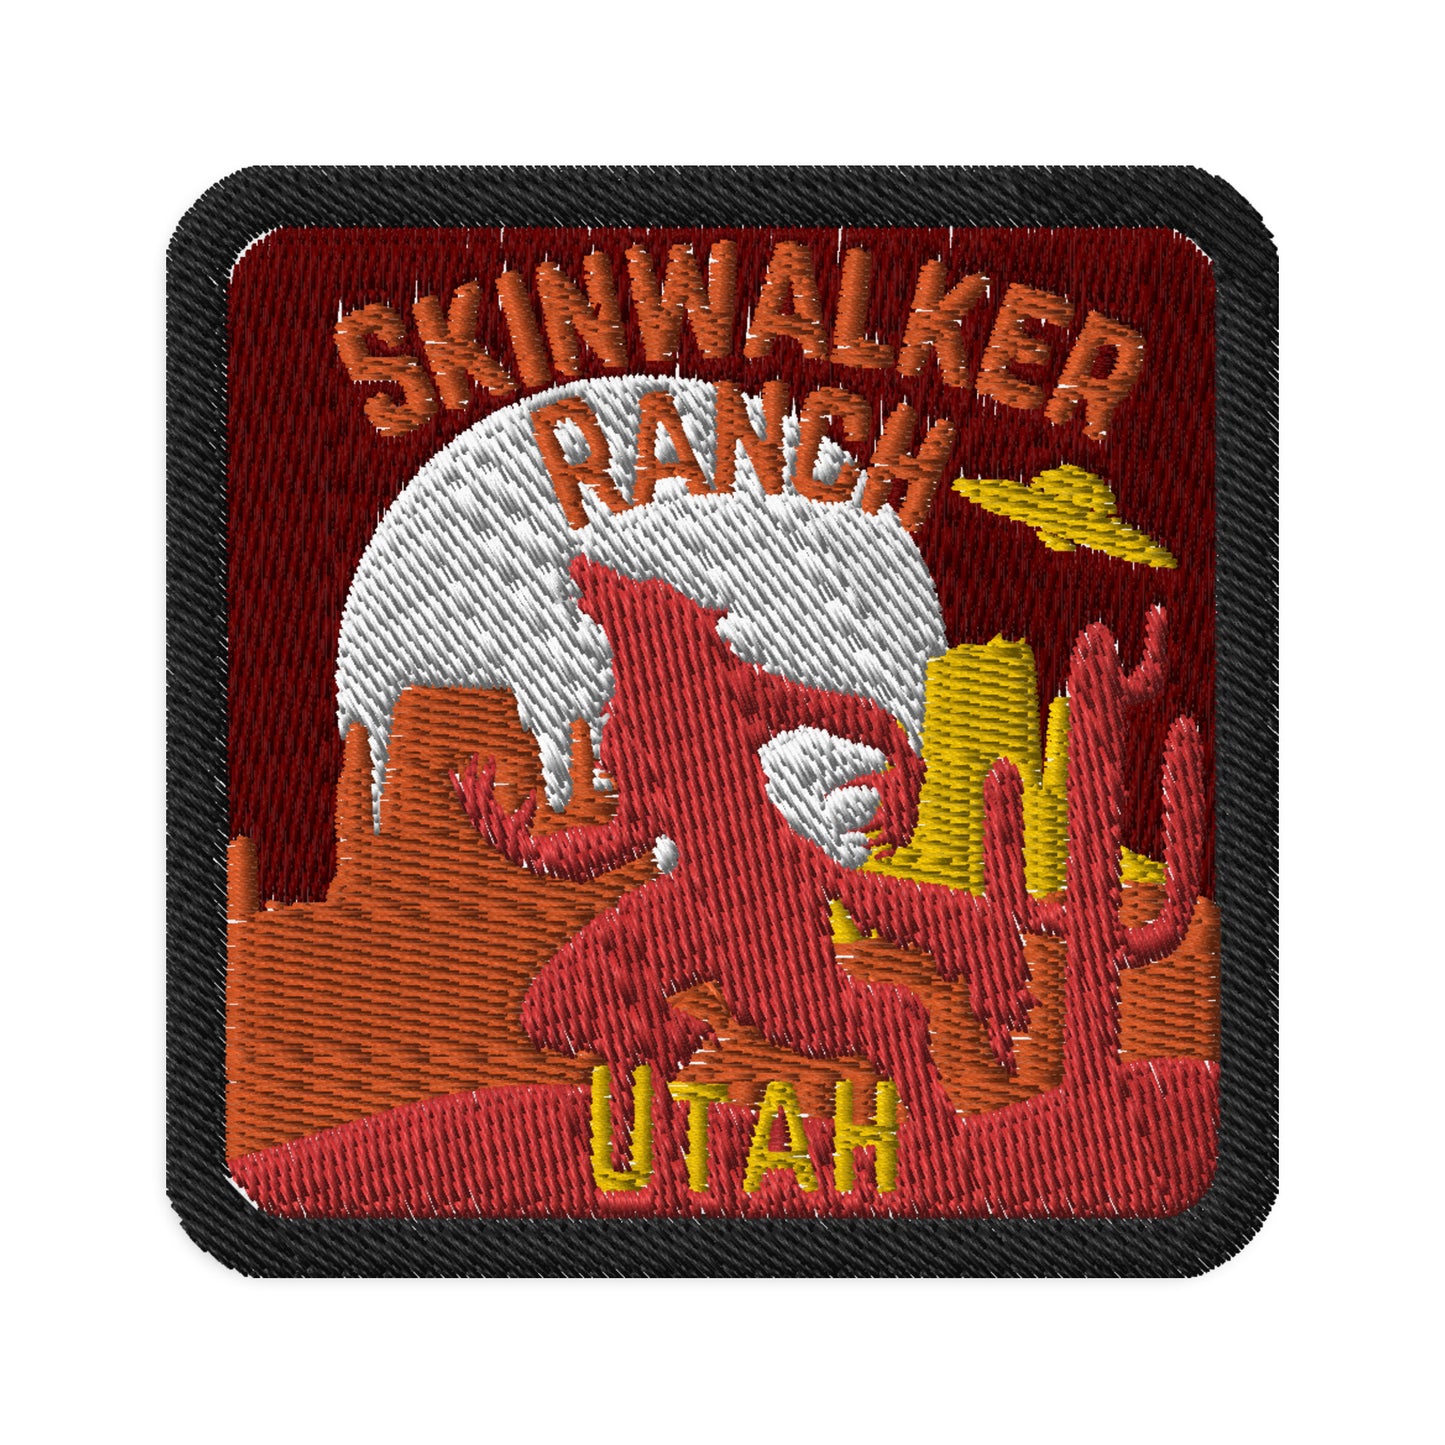 Skinwalker Ranch Utah Travel Patch